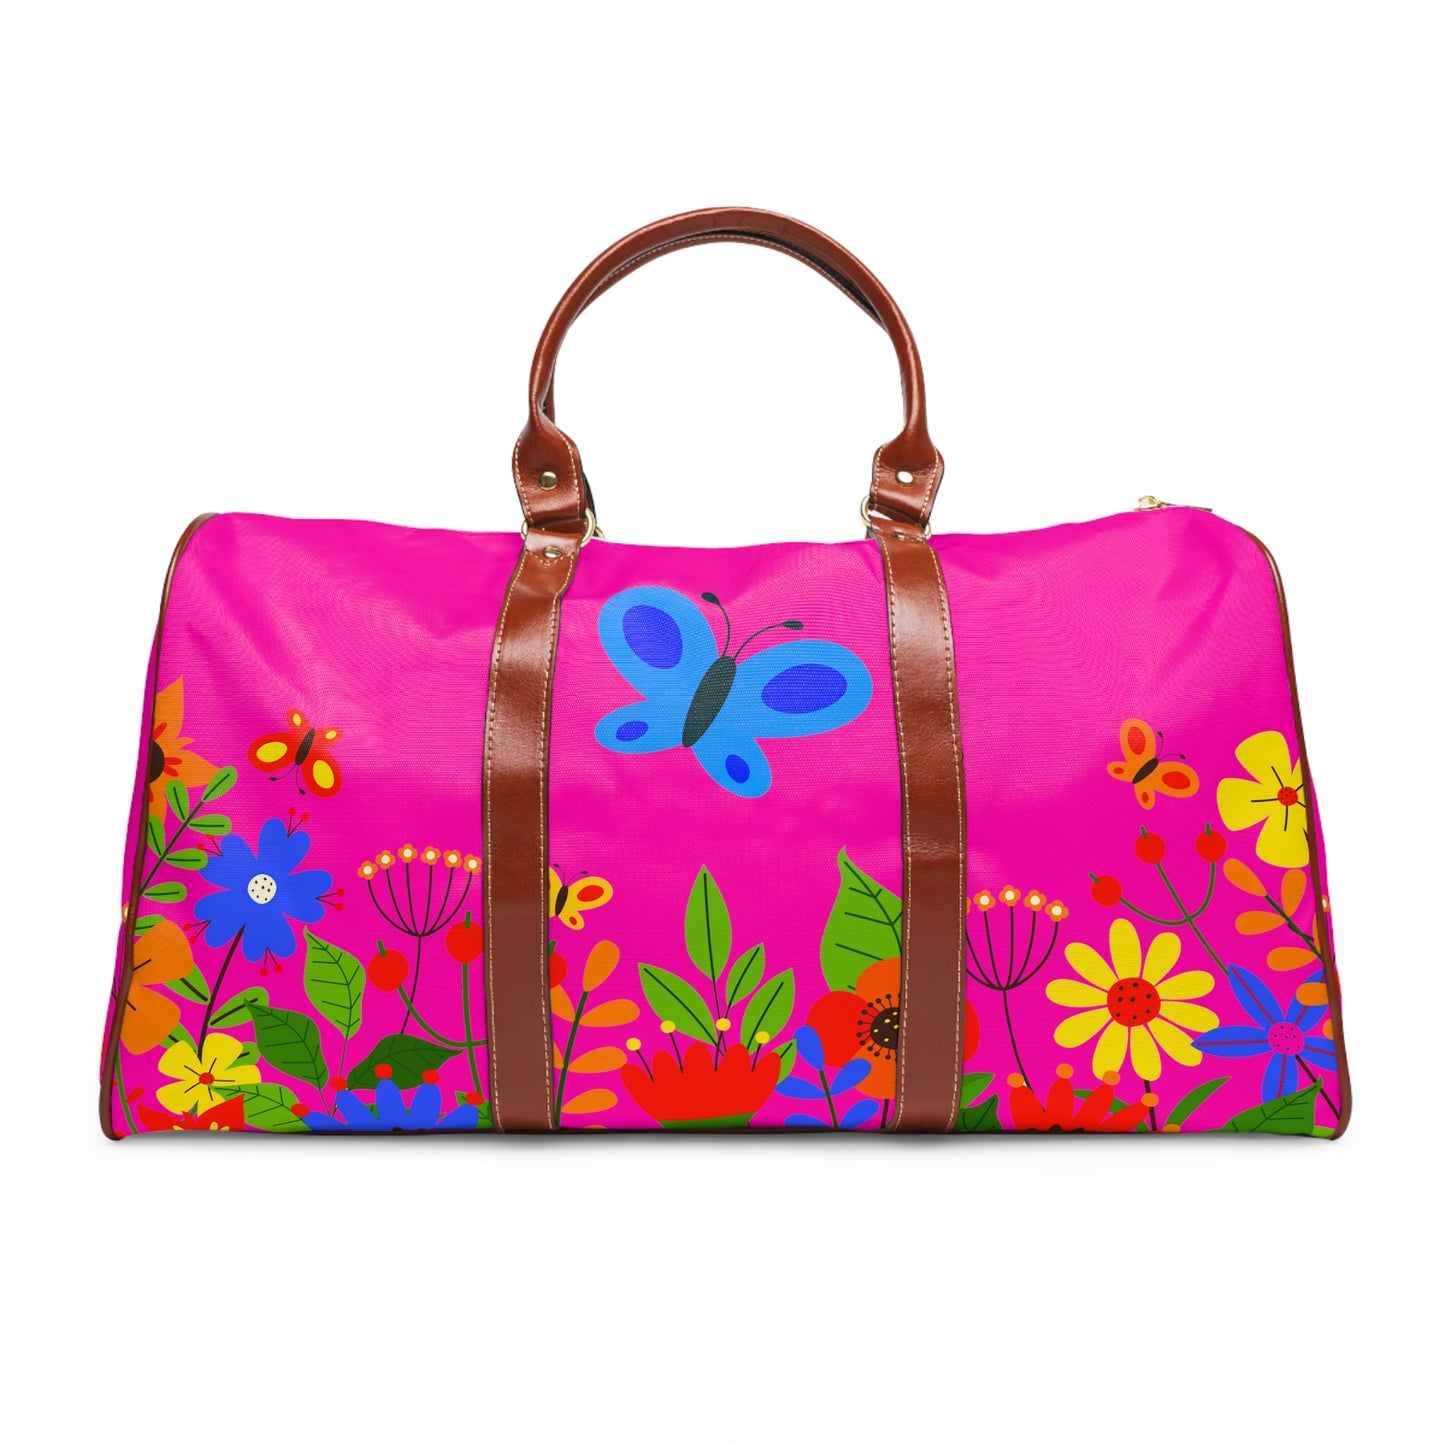 Bright Summer flowers - Mean Girls Lipstick ff00a8 - Waterproof Travel Bag